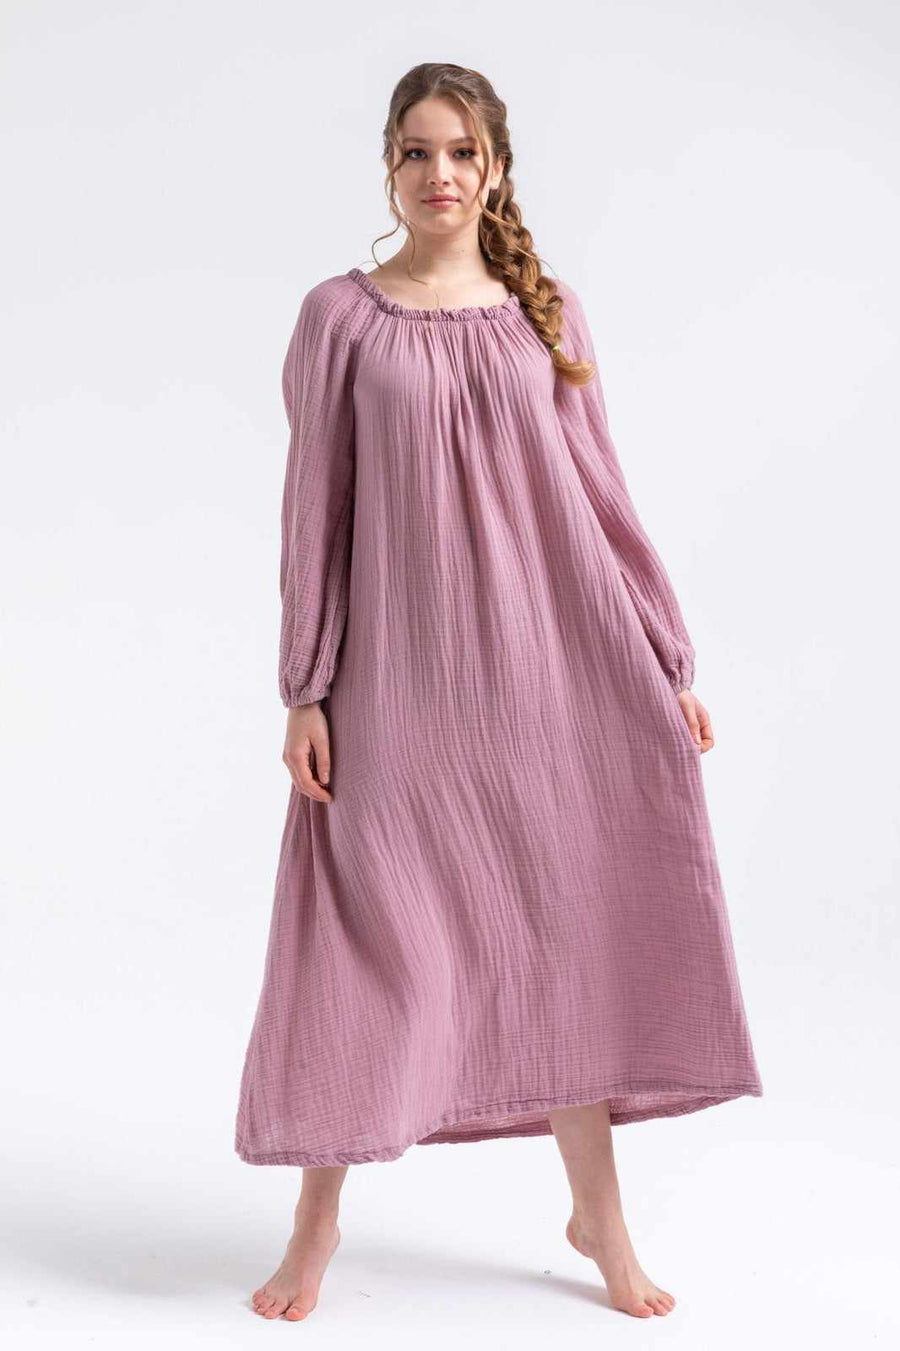 Begonville Elbise Mayde Oversize Uzun Elbise - Lila